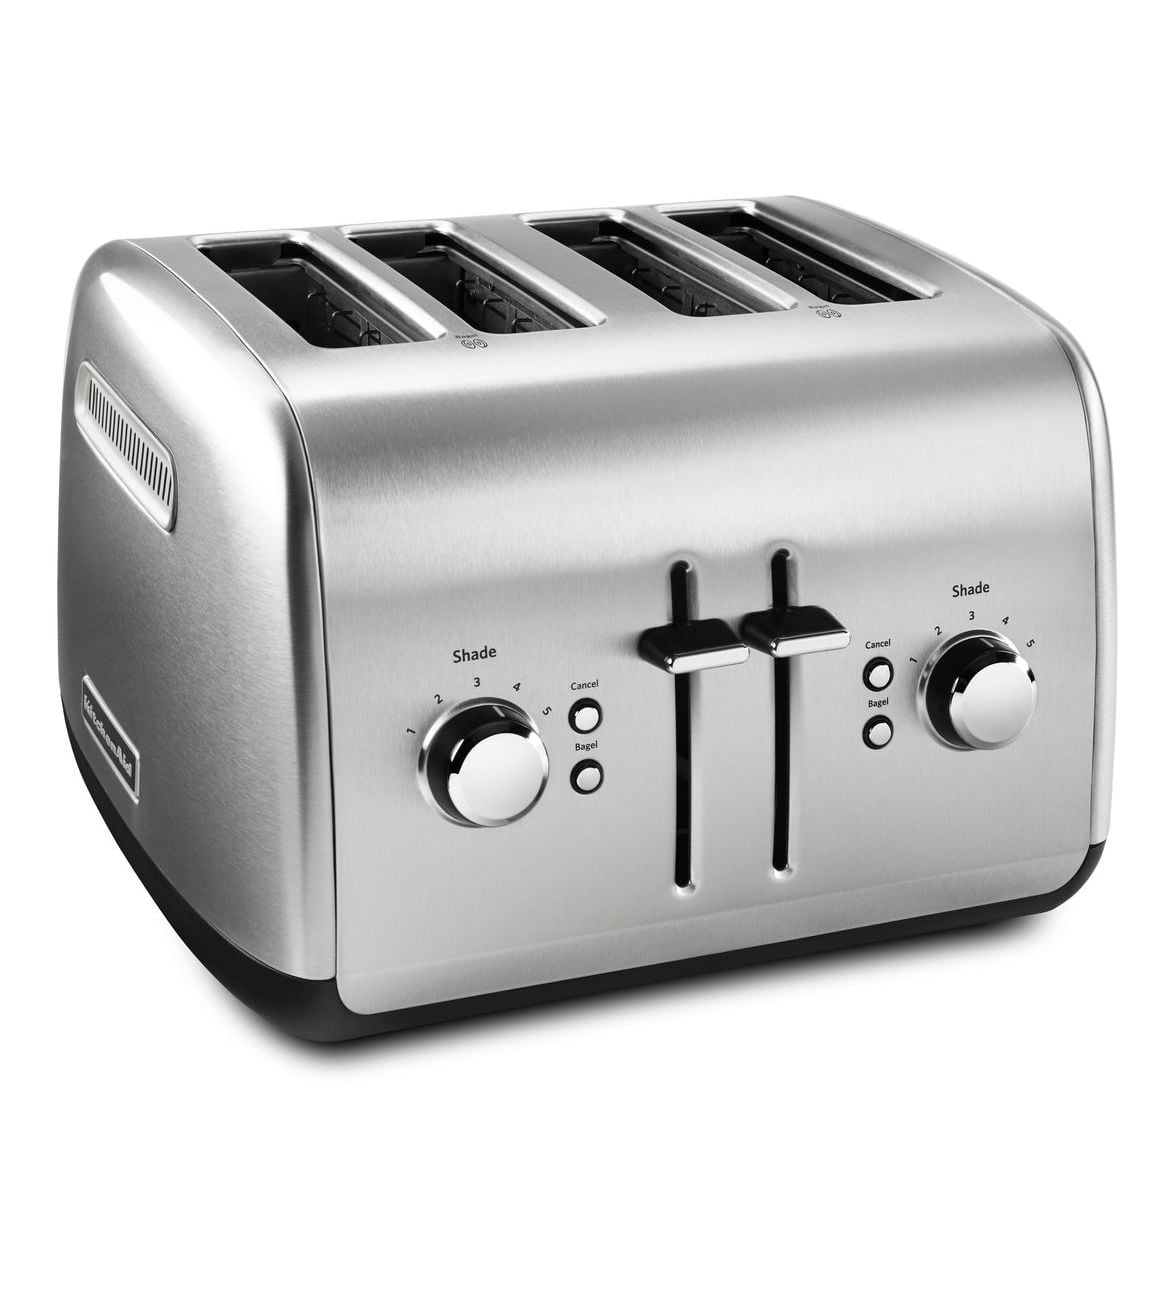 KitchenAid 4-Slice Manual Toaster review: Make toast slowly, with retro  looks - CNET